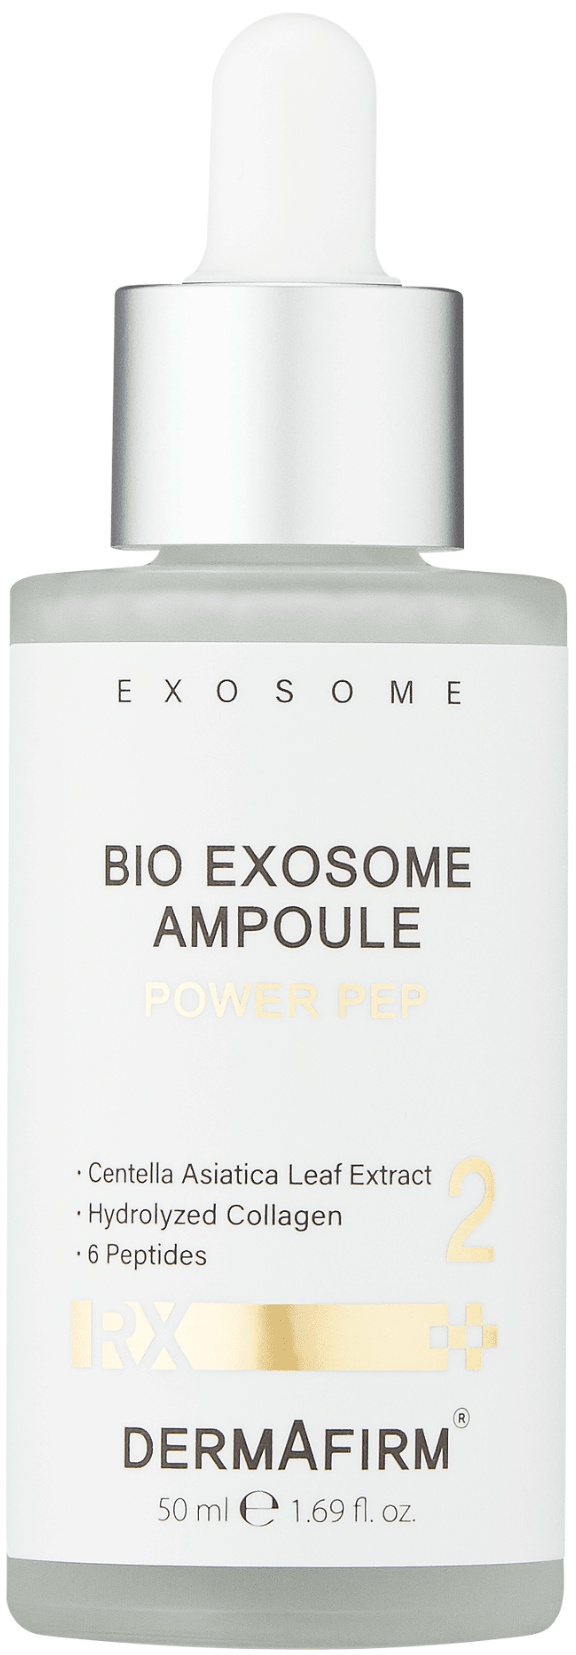 Dermafirm Rx Bio Exosome Ampoule Power Pep